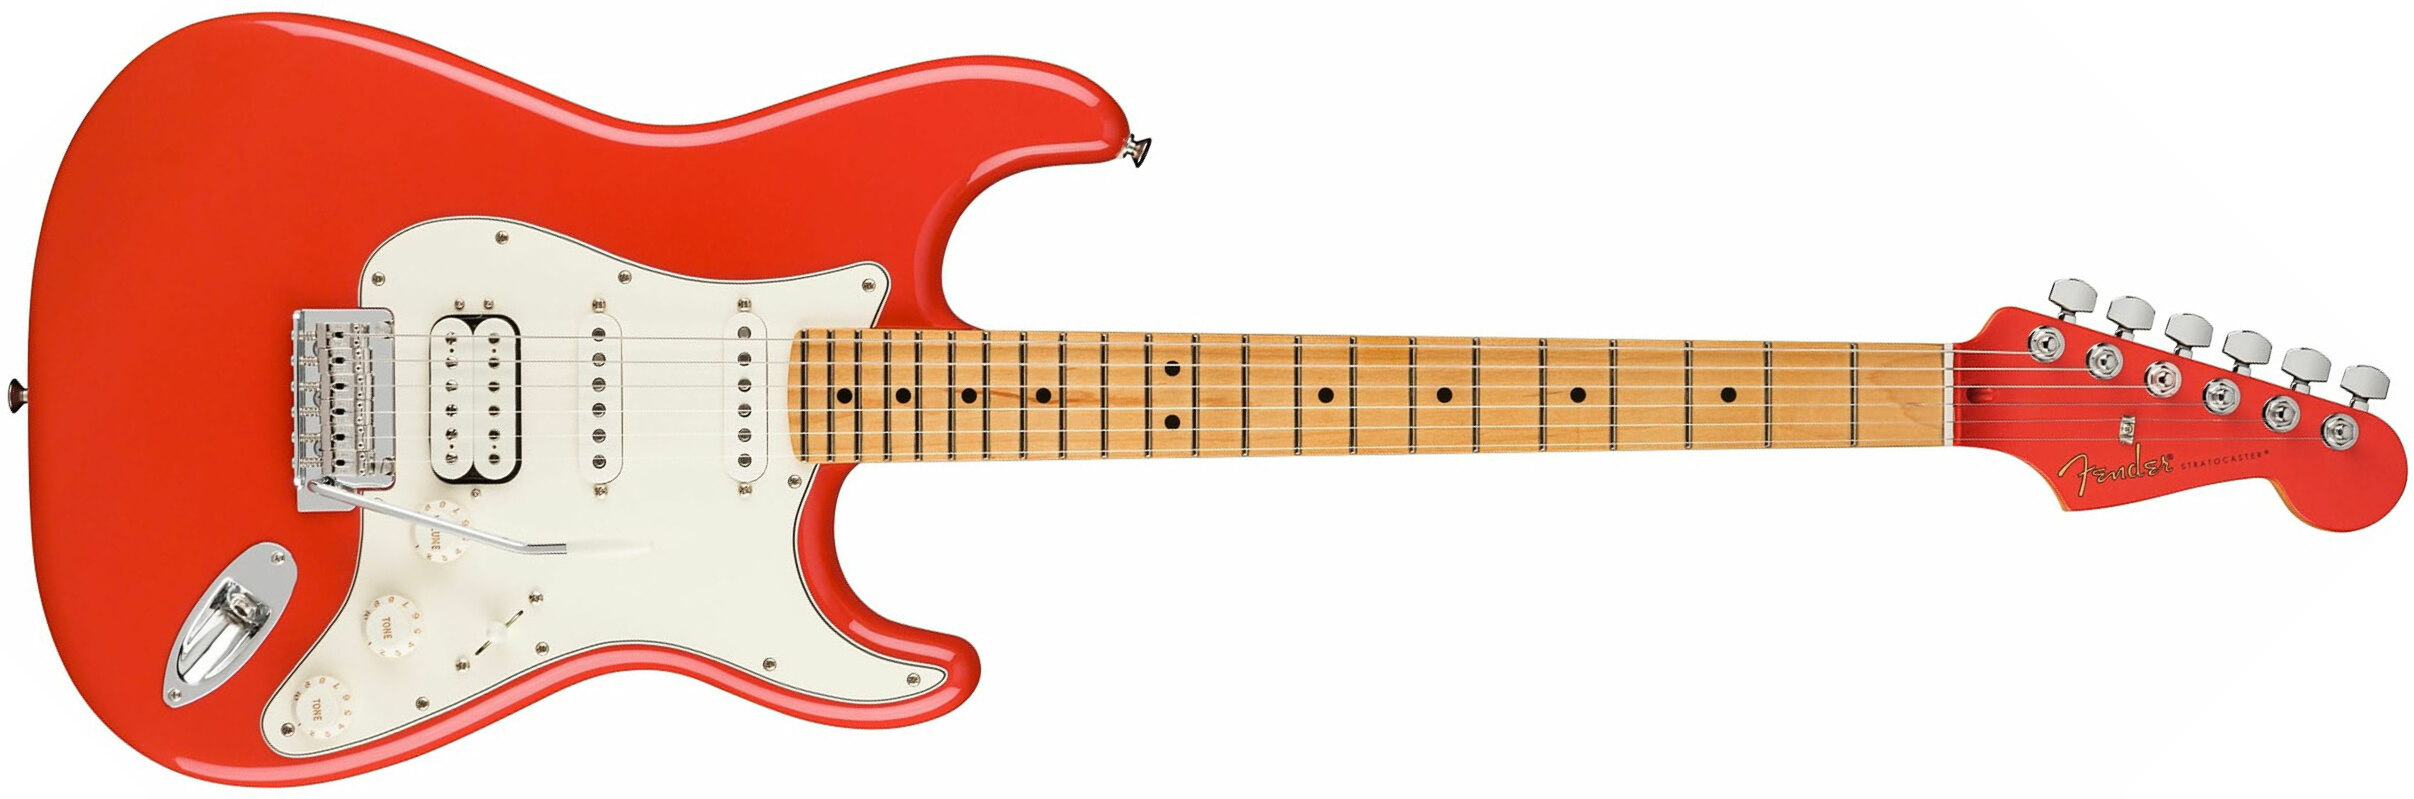 Fender Strat Player Hss Ltd Mex Trem Mn - Fiesta Red - E-Gitarre in Str-Form - Main picture